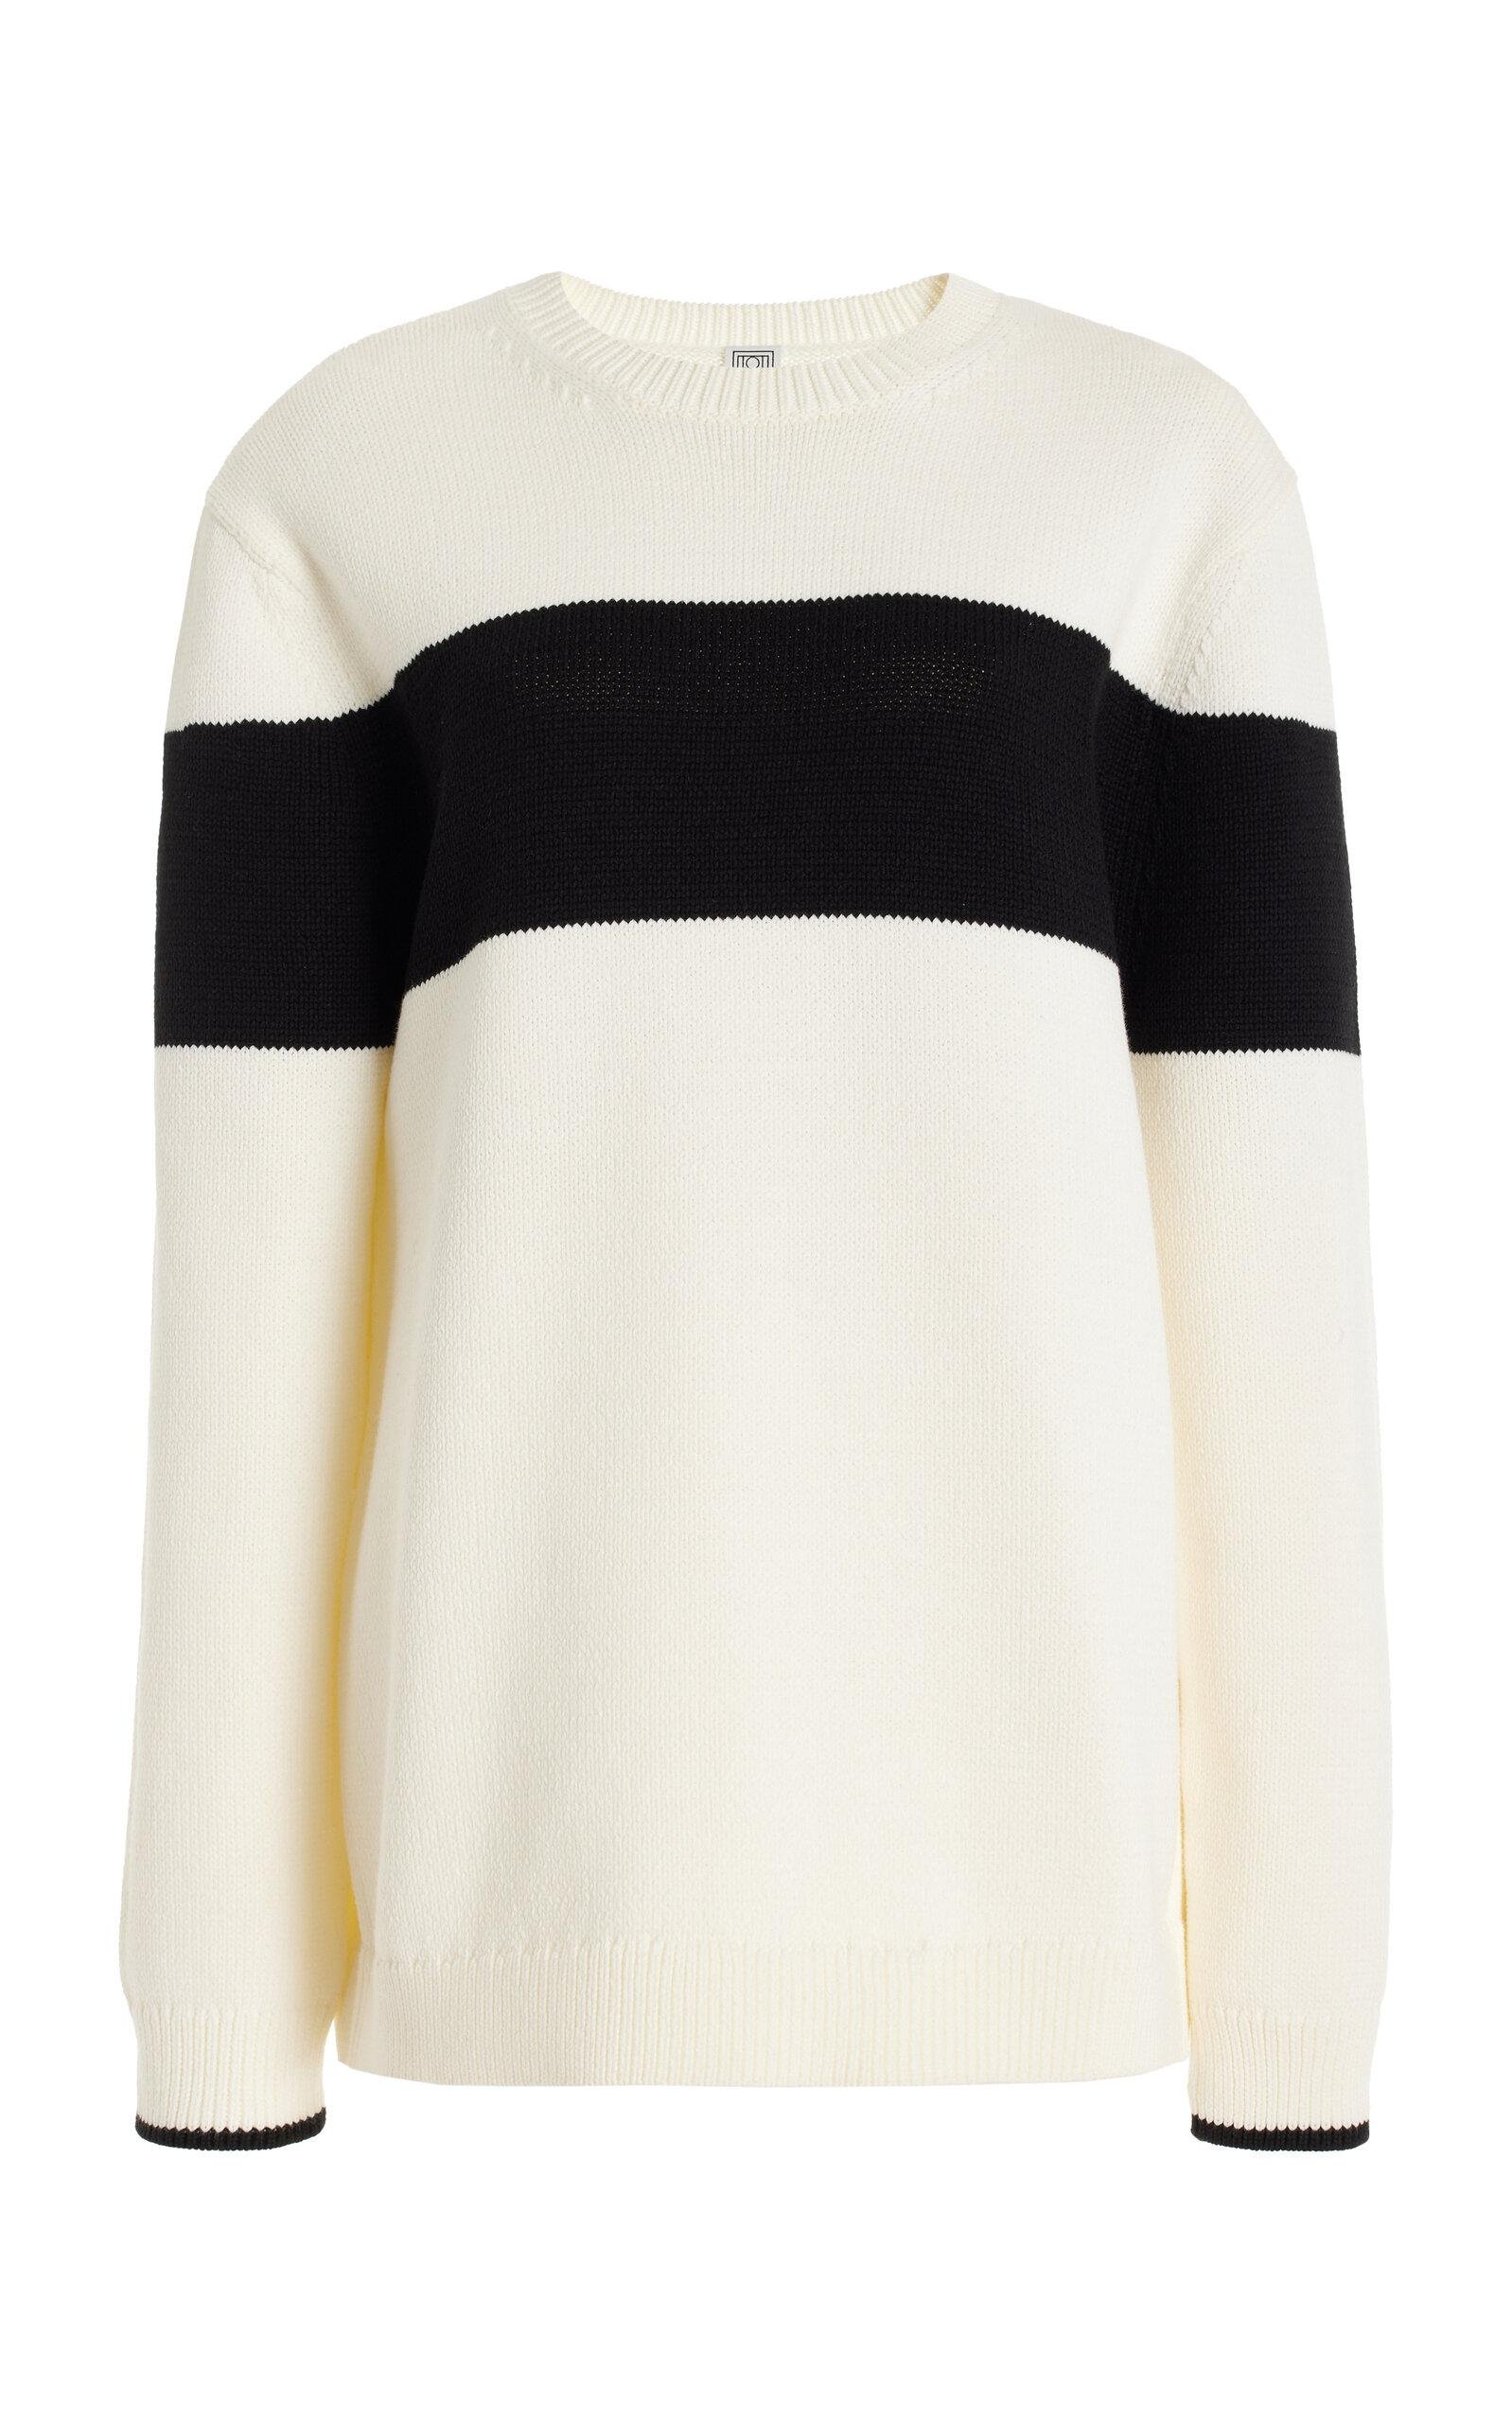 Toteme - Contrast-Striped Knit Sweater - Black/white - S - Moda Operandi by TOTEME